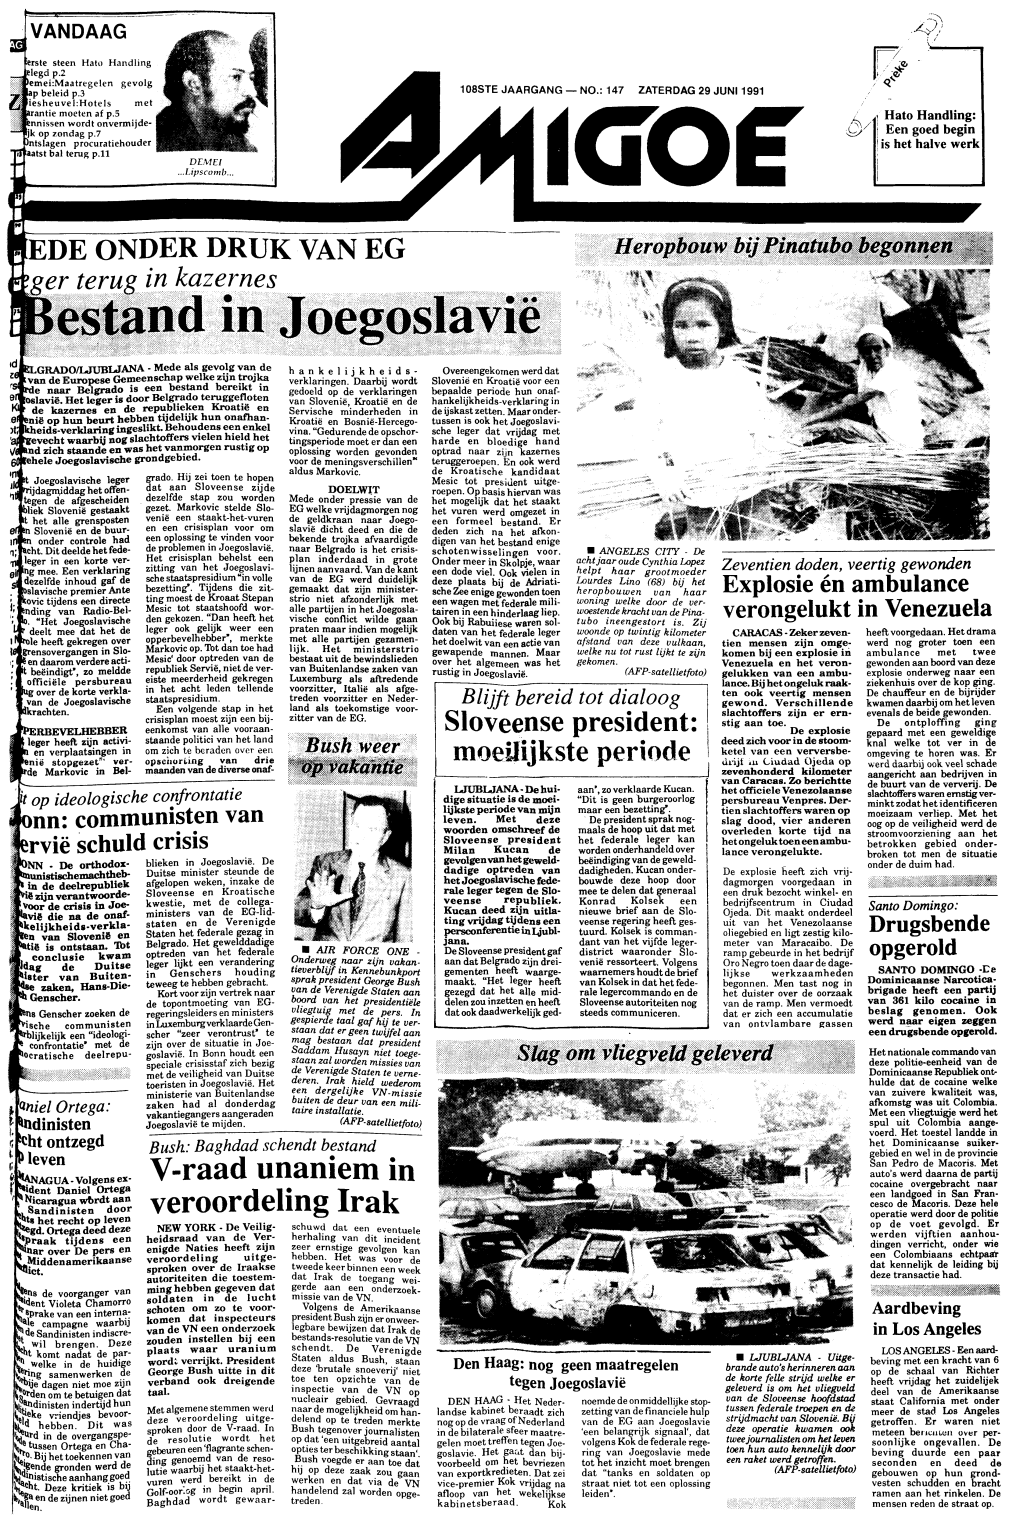 Bestand in Joegoslavië